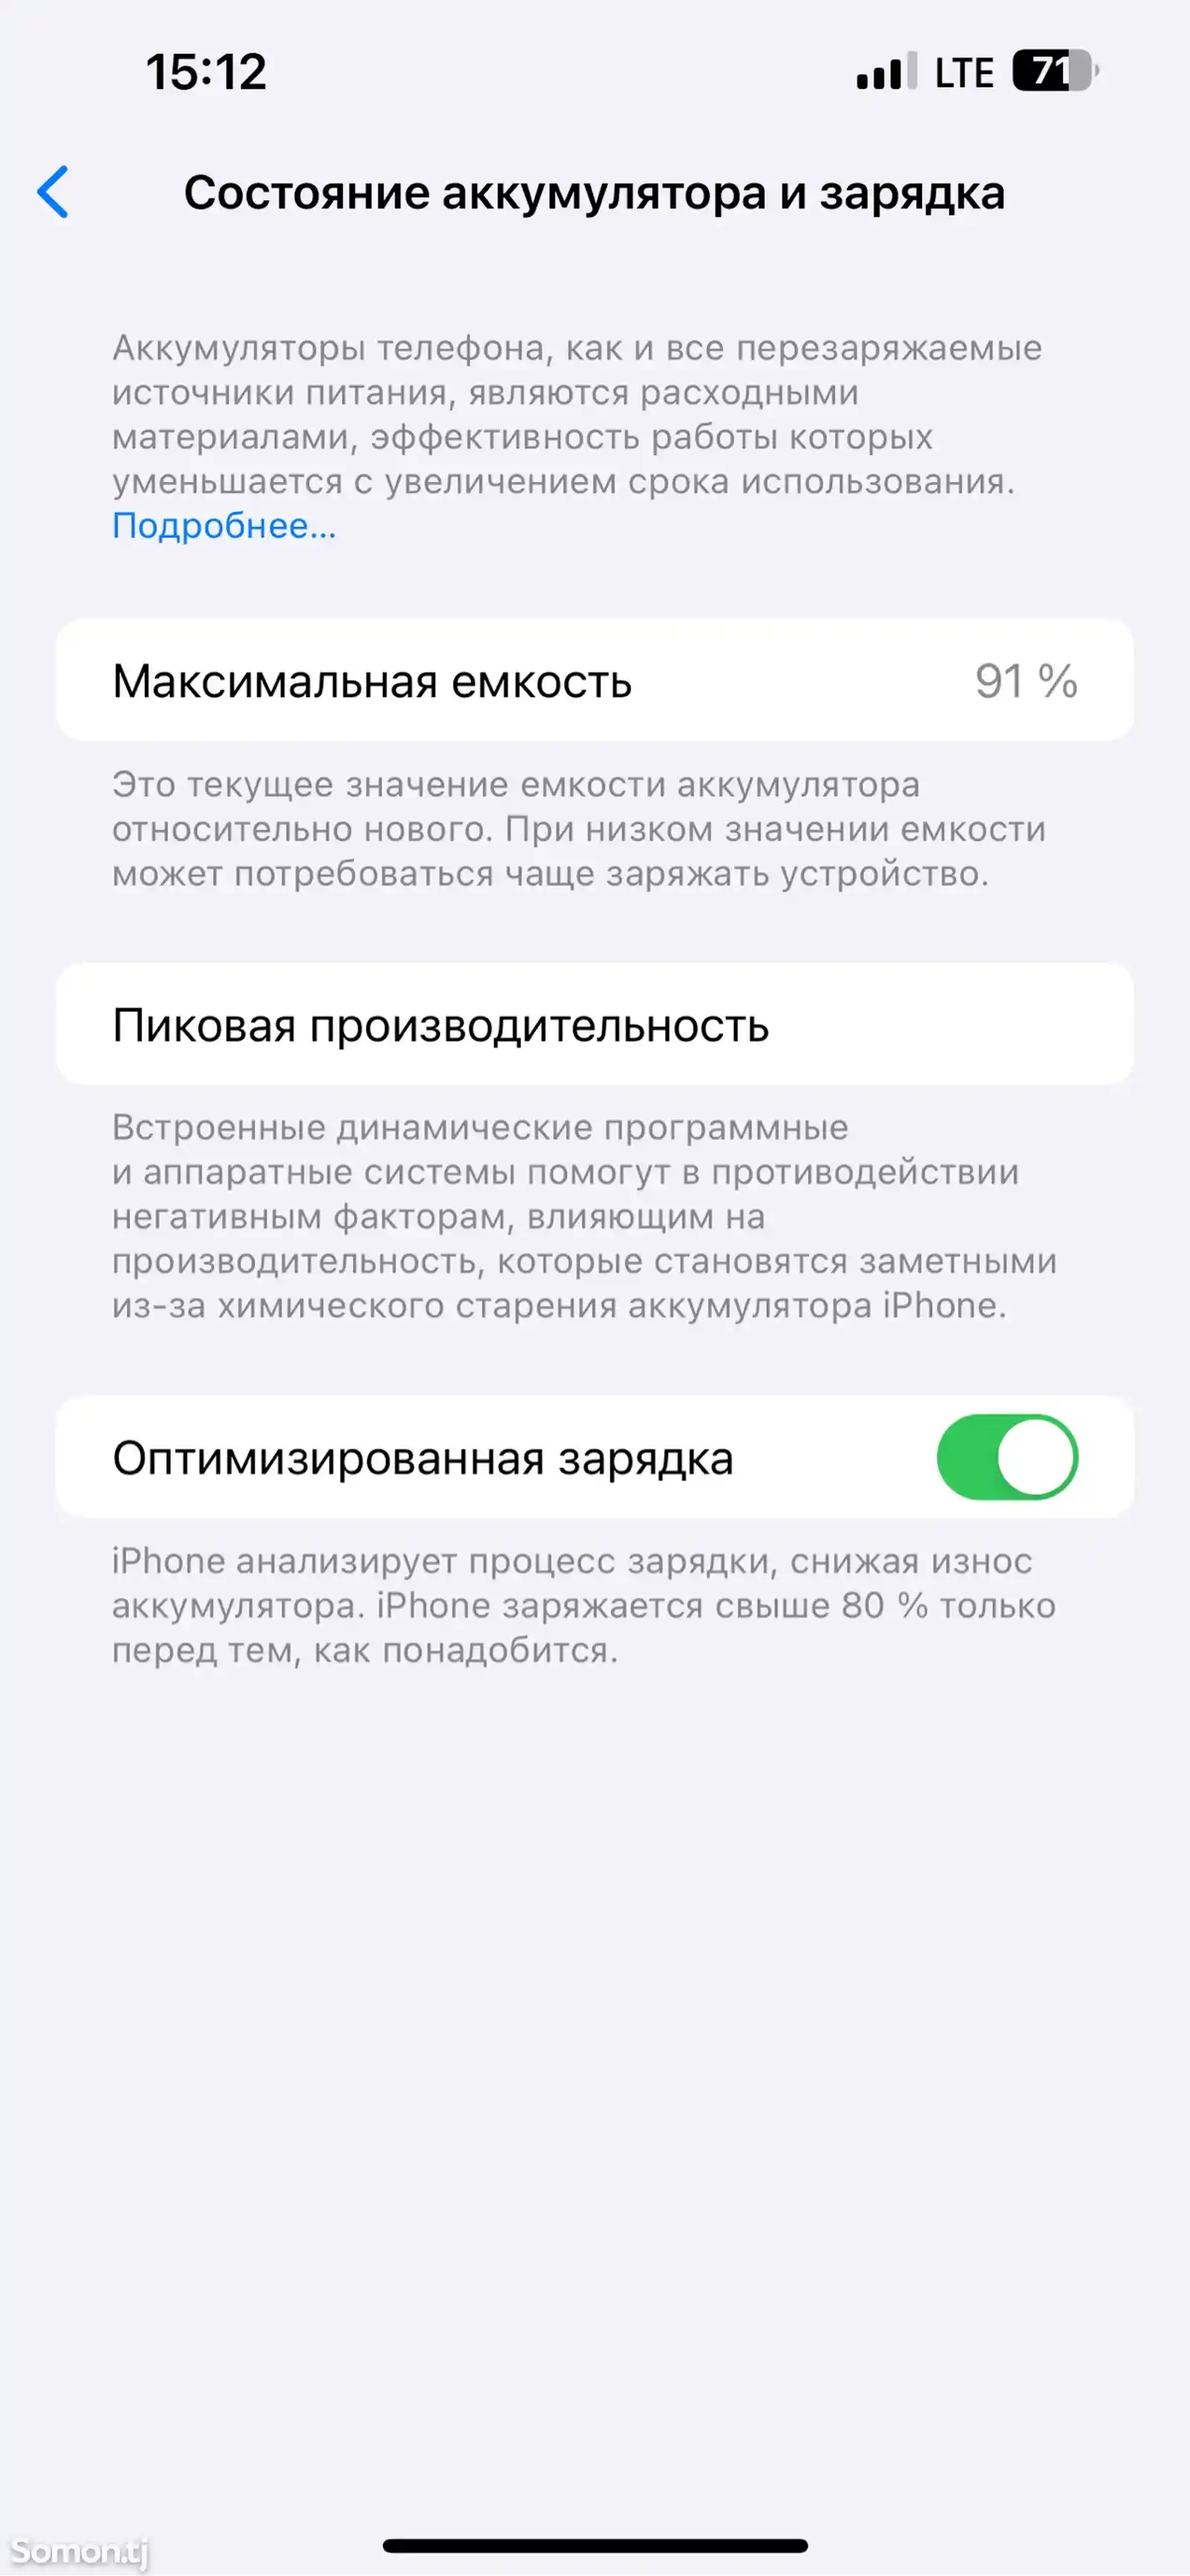 Apple iPhone 13 Pro Max, 256 gb, Alpine Green-3